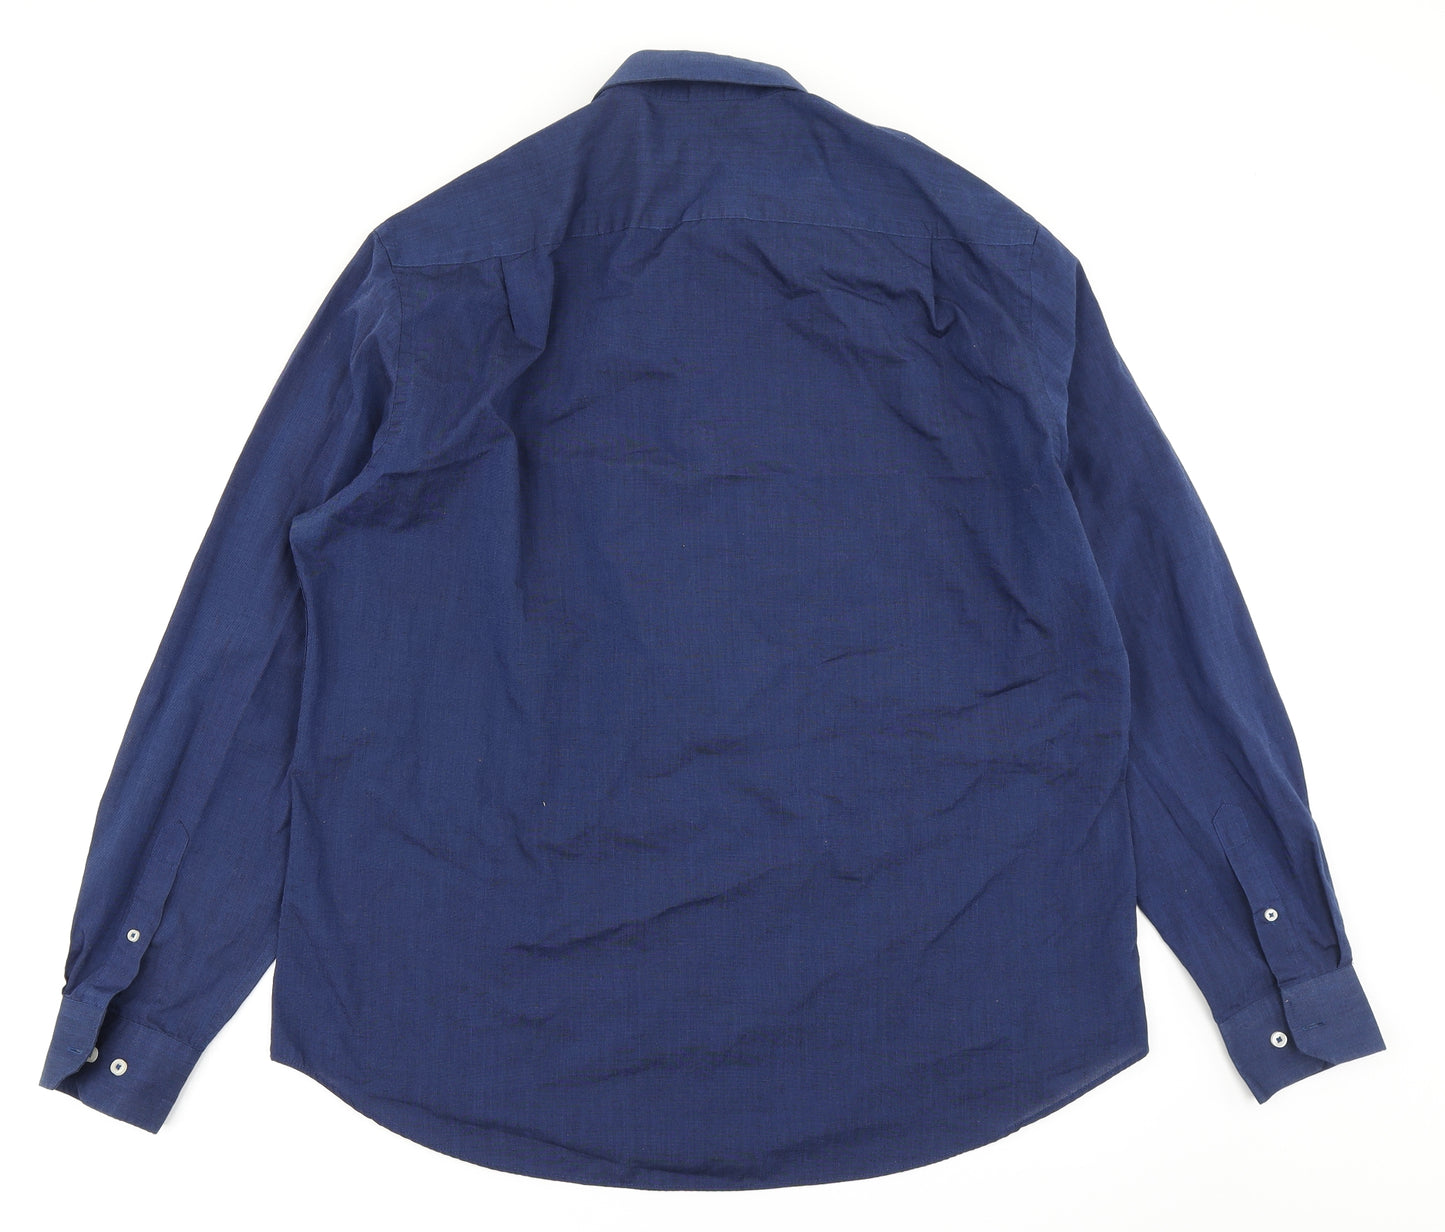 George Mens Blue    Dress Shirt Size 17